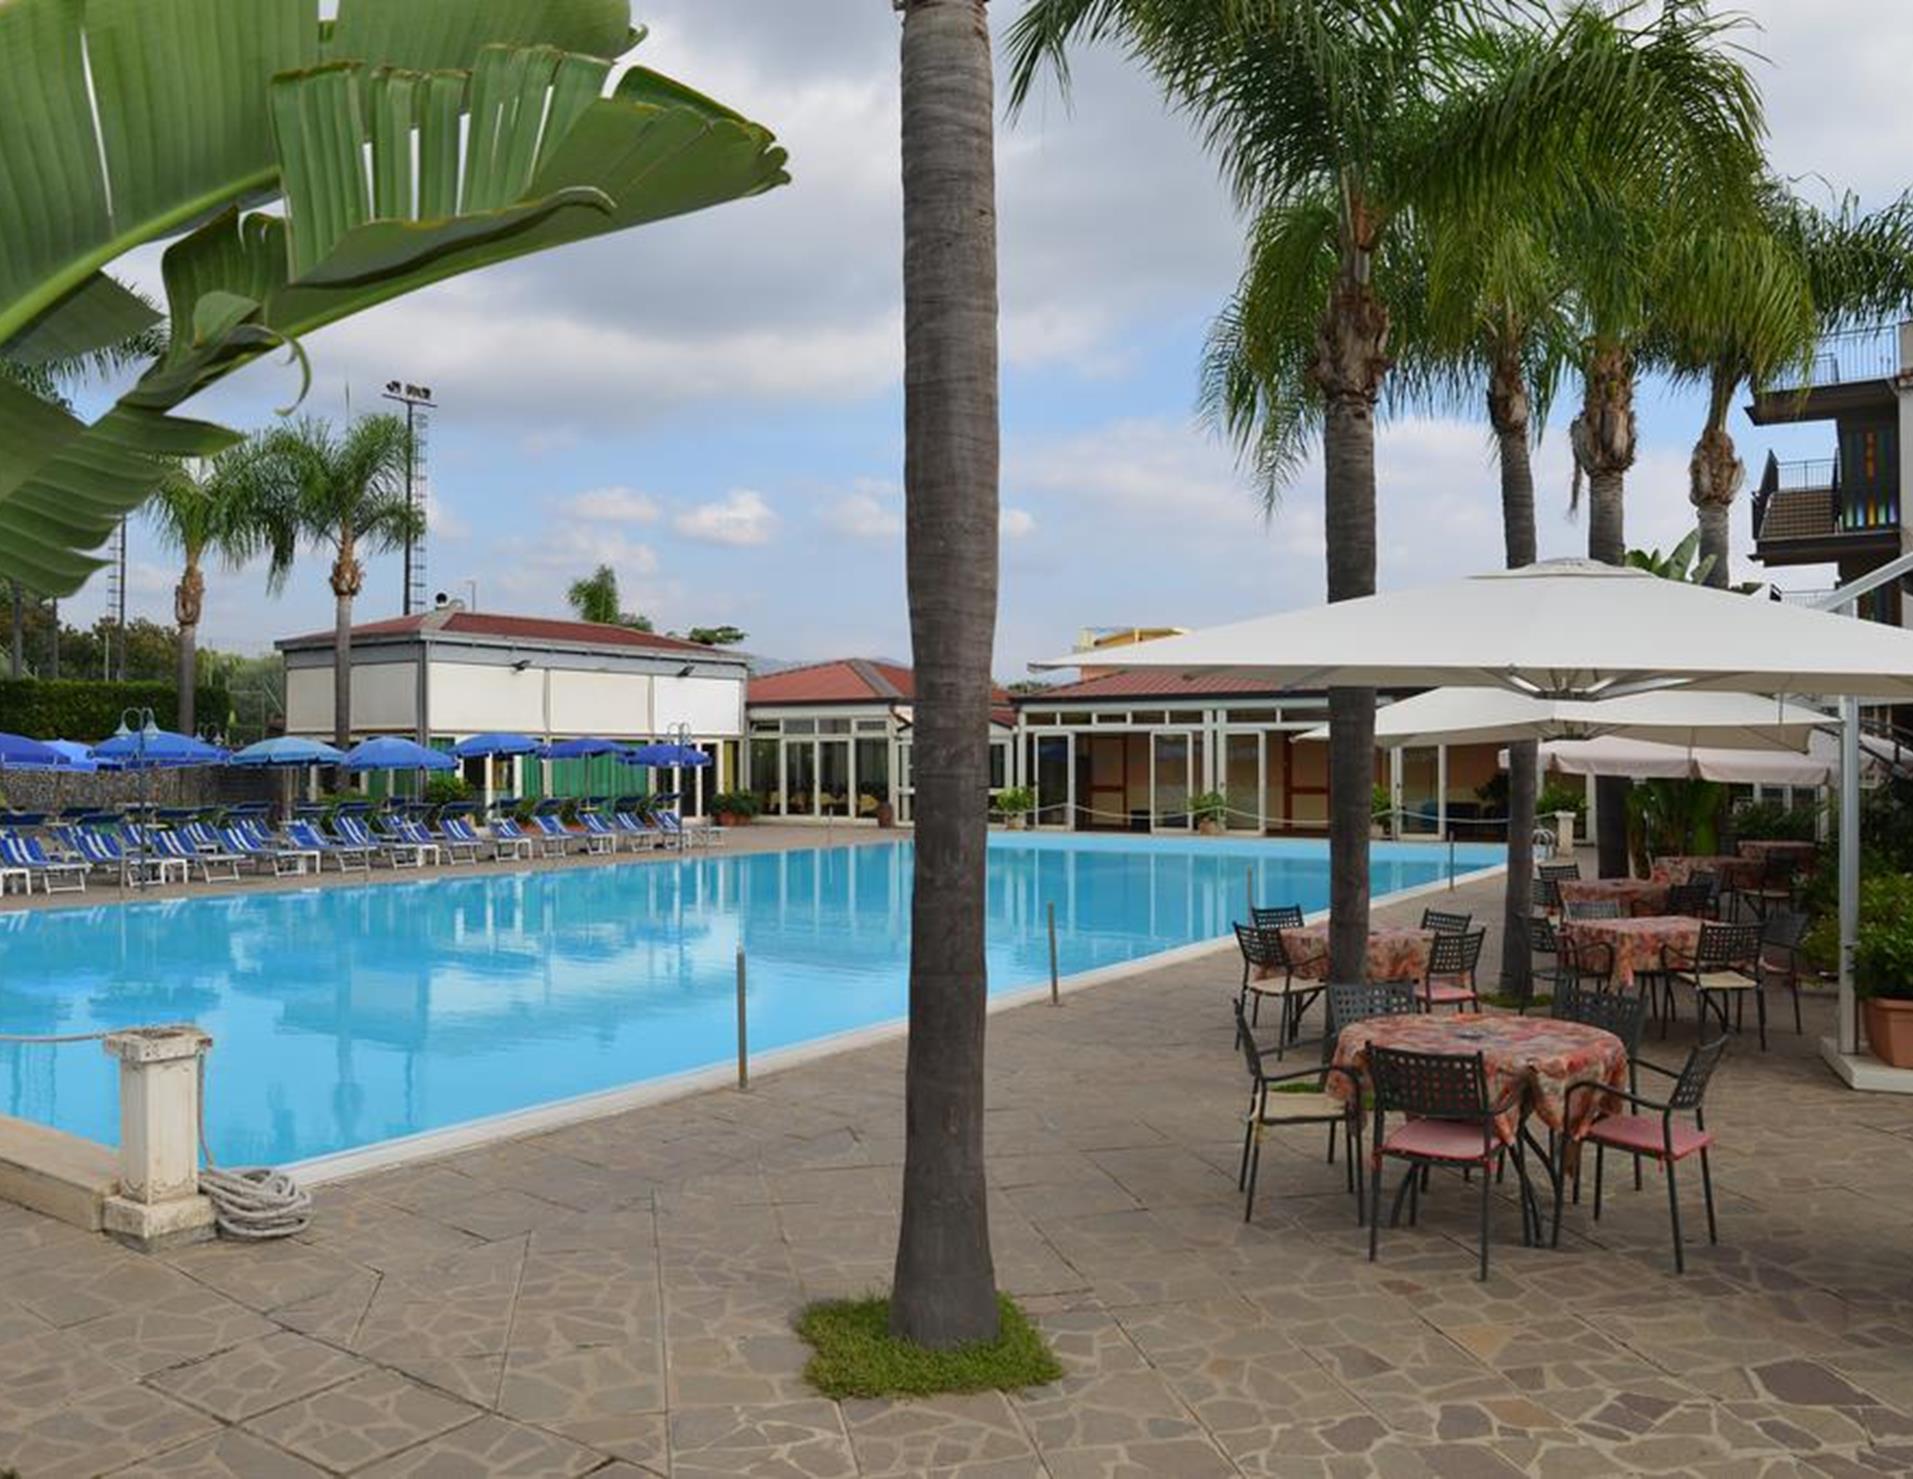 Atlantis Palace Hotel - Swimming Pool